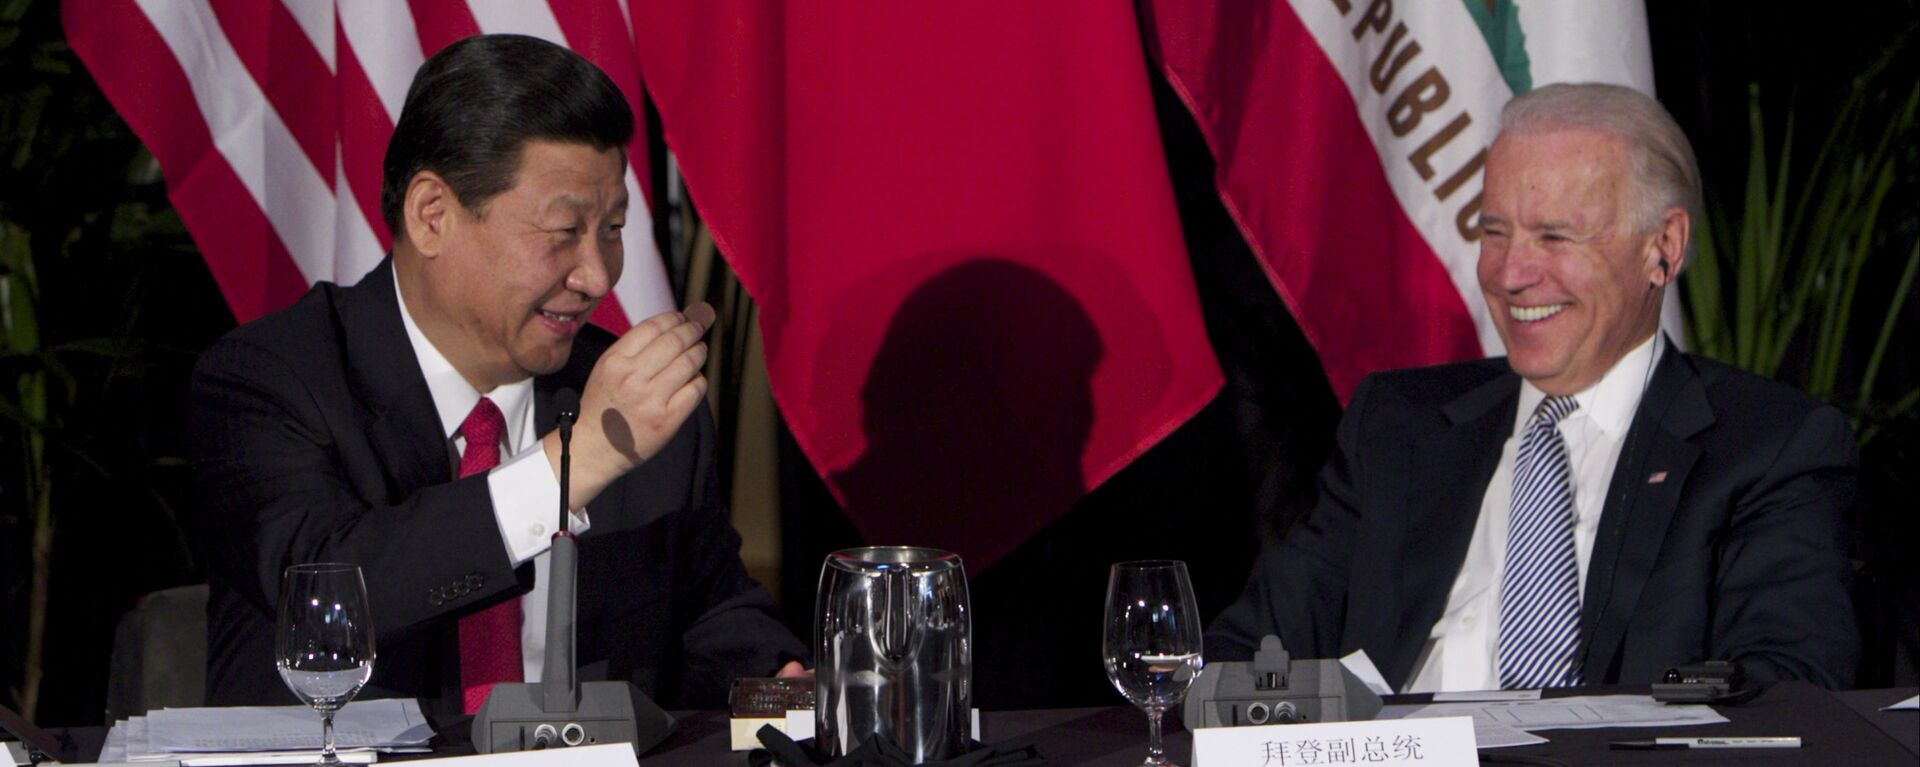 Глава Китая Си Цзиньпин ест шоколад на встрече с вице-президентом США Джо Байденом  - 俄羅斯衛星通訊社, 1920, 07.10.2021